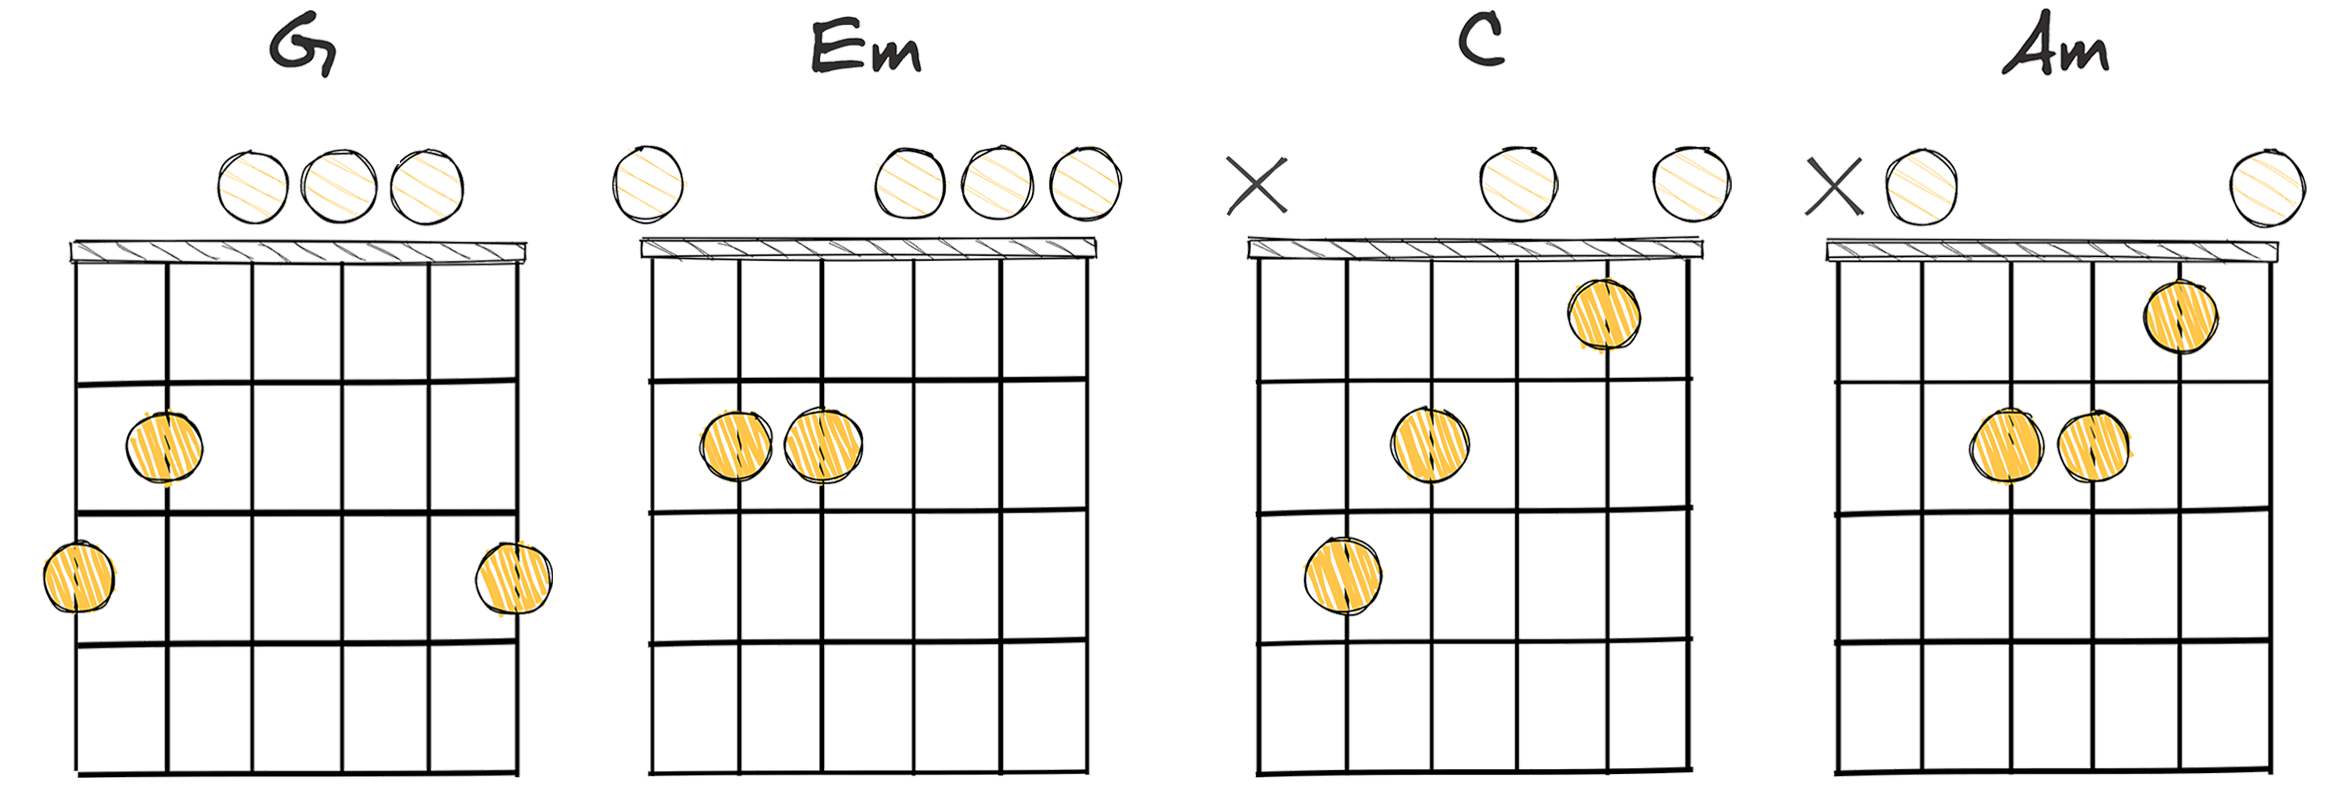 I–vi–IV–ii chords diagram